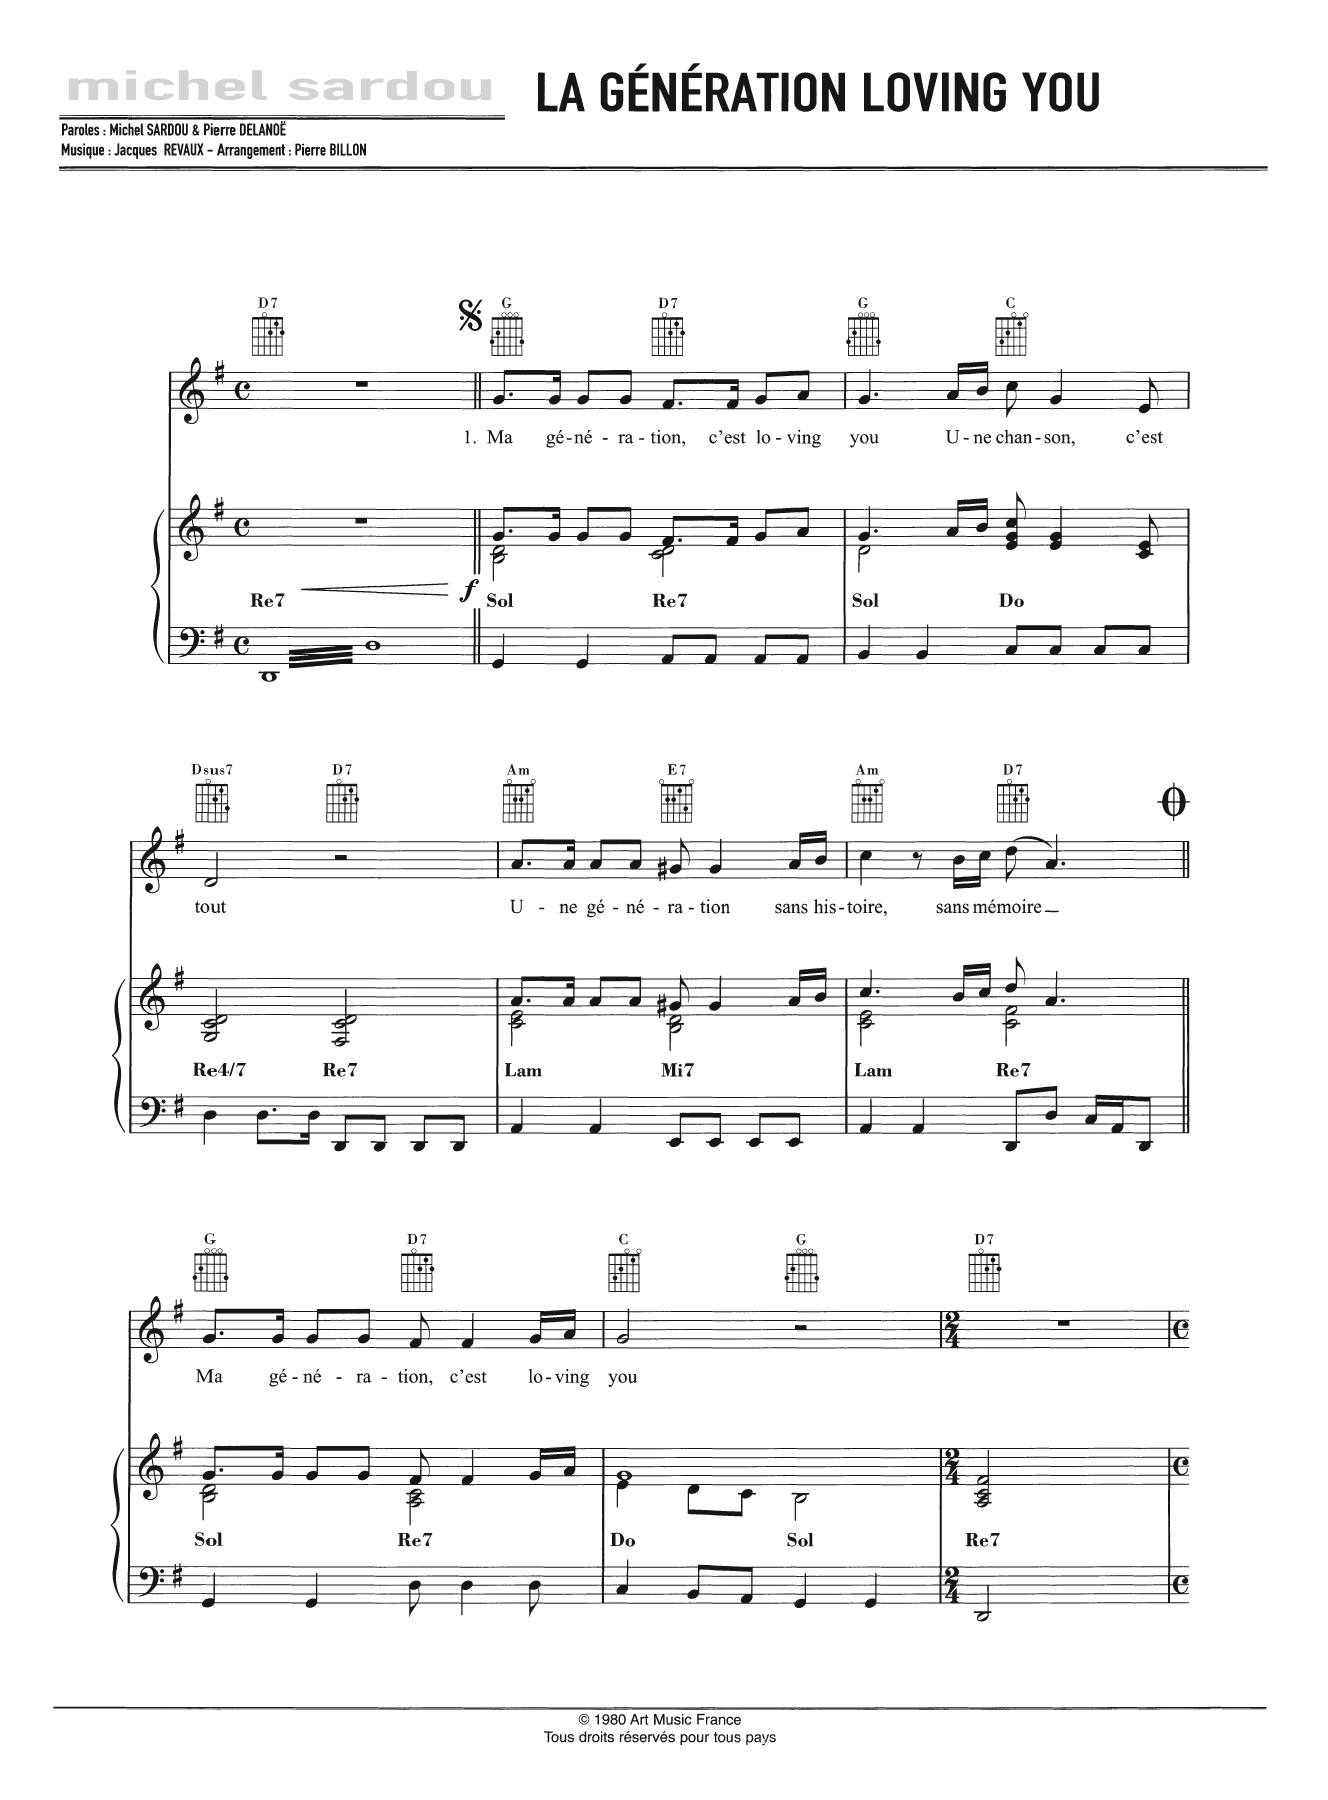 Michel Sardou La Generation Loving You Sheet Music Notes & Chords for Piano, Vocal & Guitar - Download or Print PDF